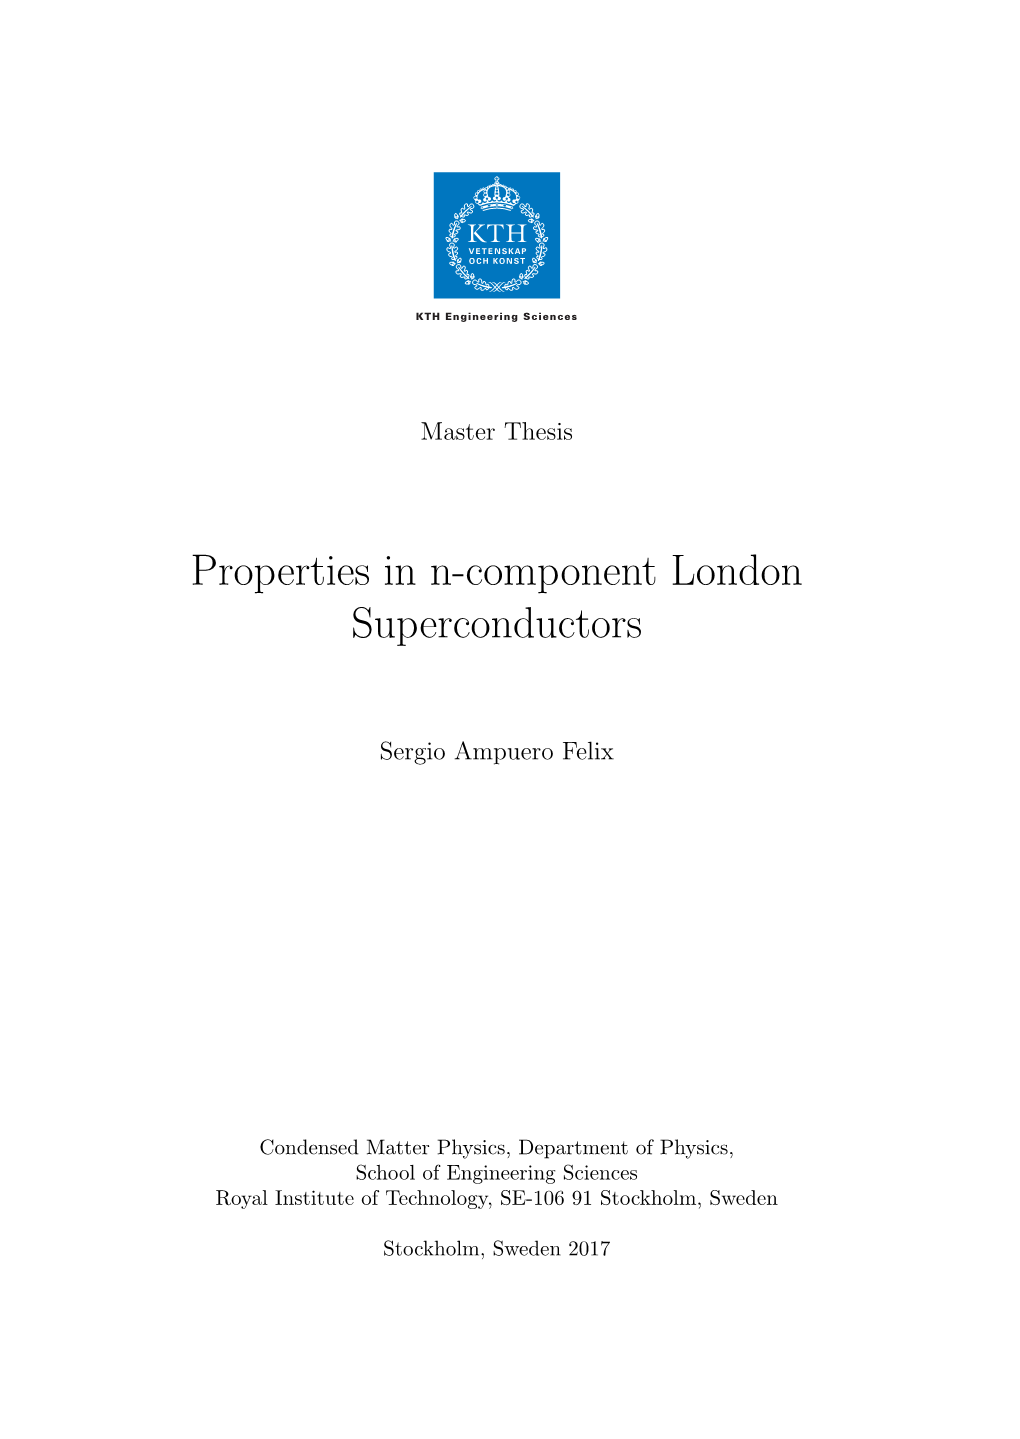 Properties in N-Component London Superconductors